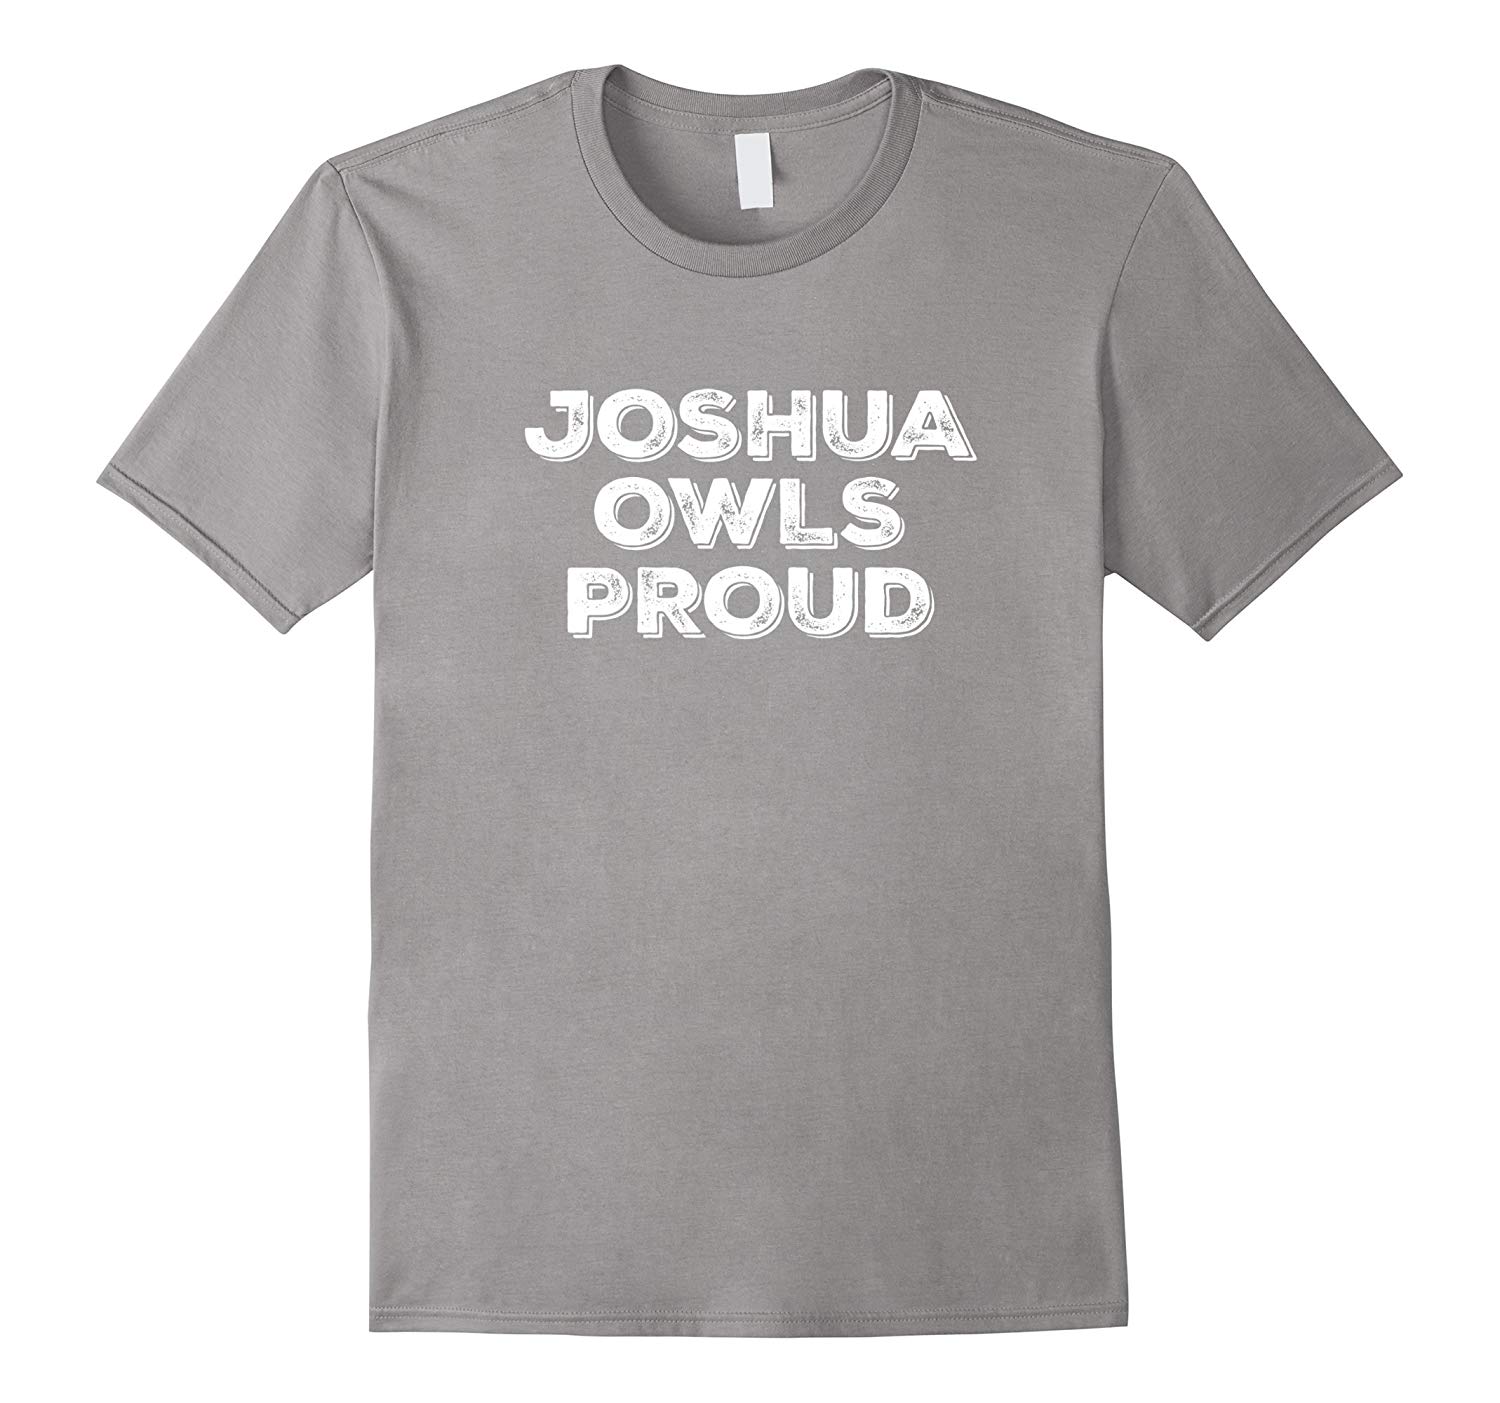 Joshua Owls Logo - Joshua Owls Proud School T Shirt: Clothing